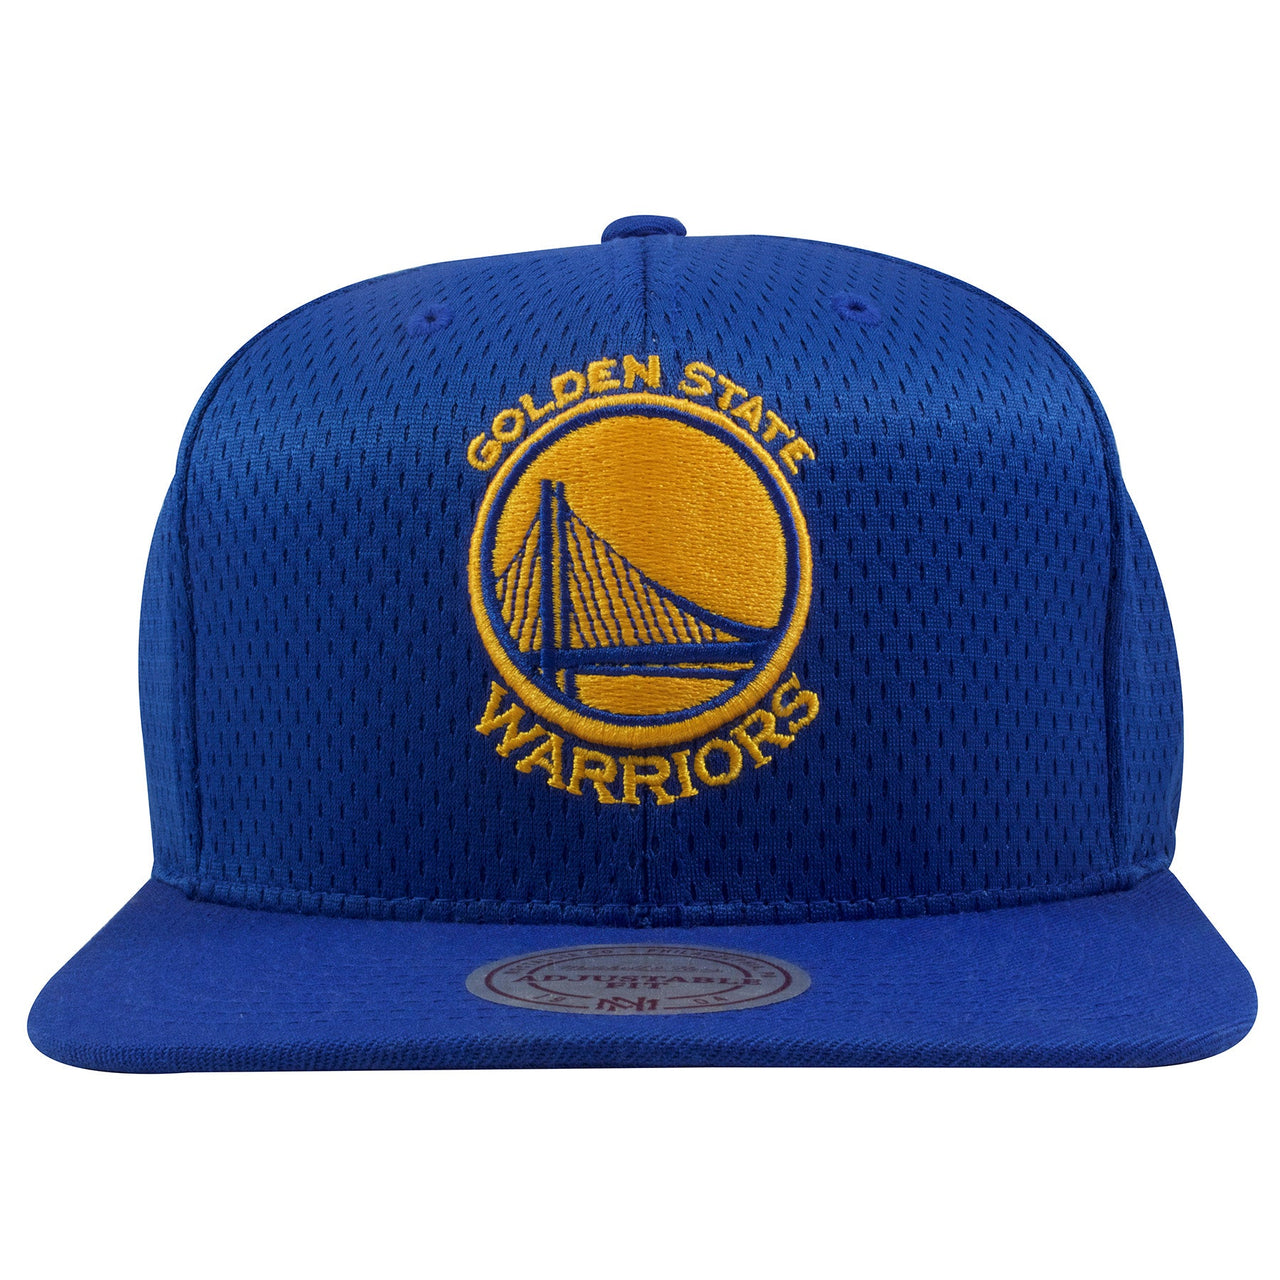 Golden State Warriors Royal Blue Mesh Jersey Snapback Hat